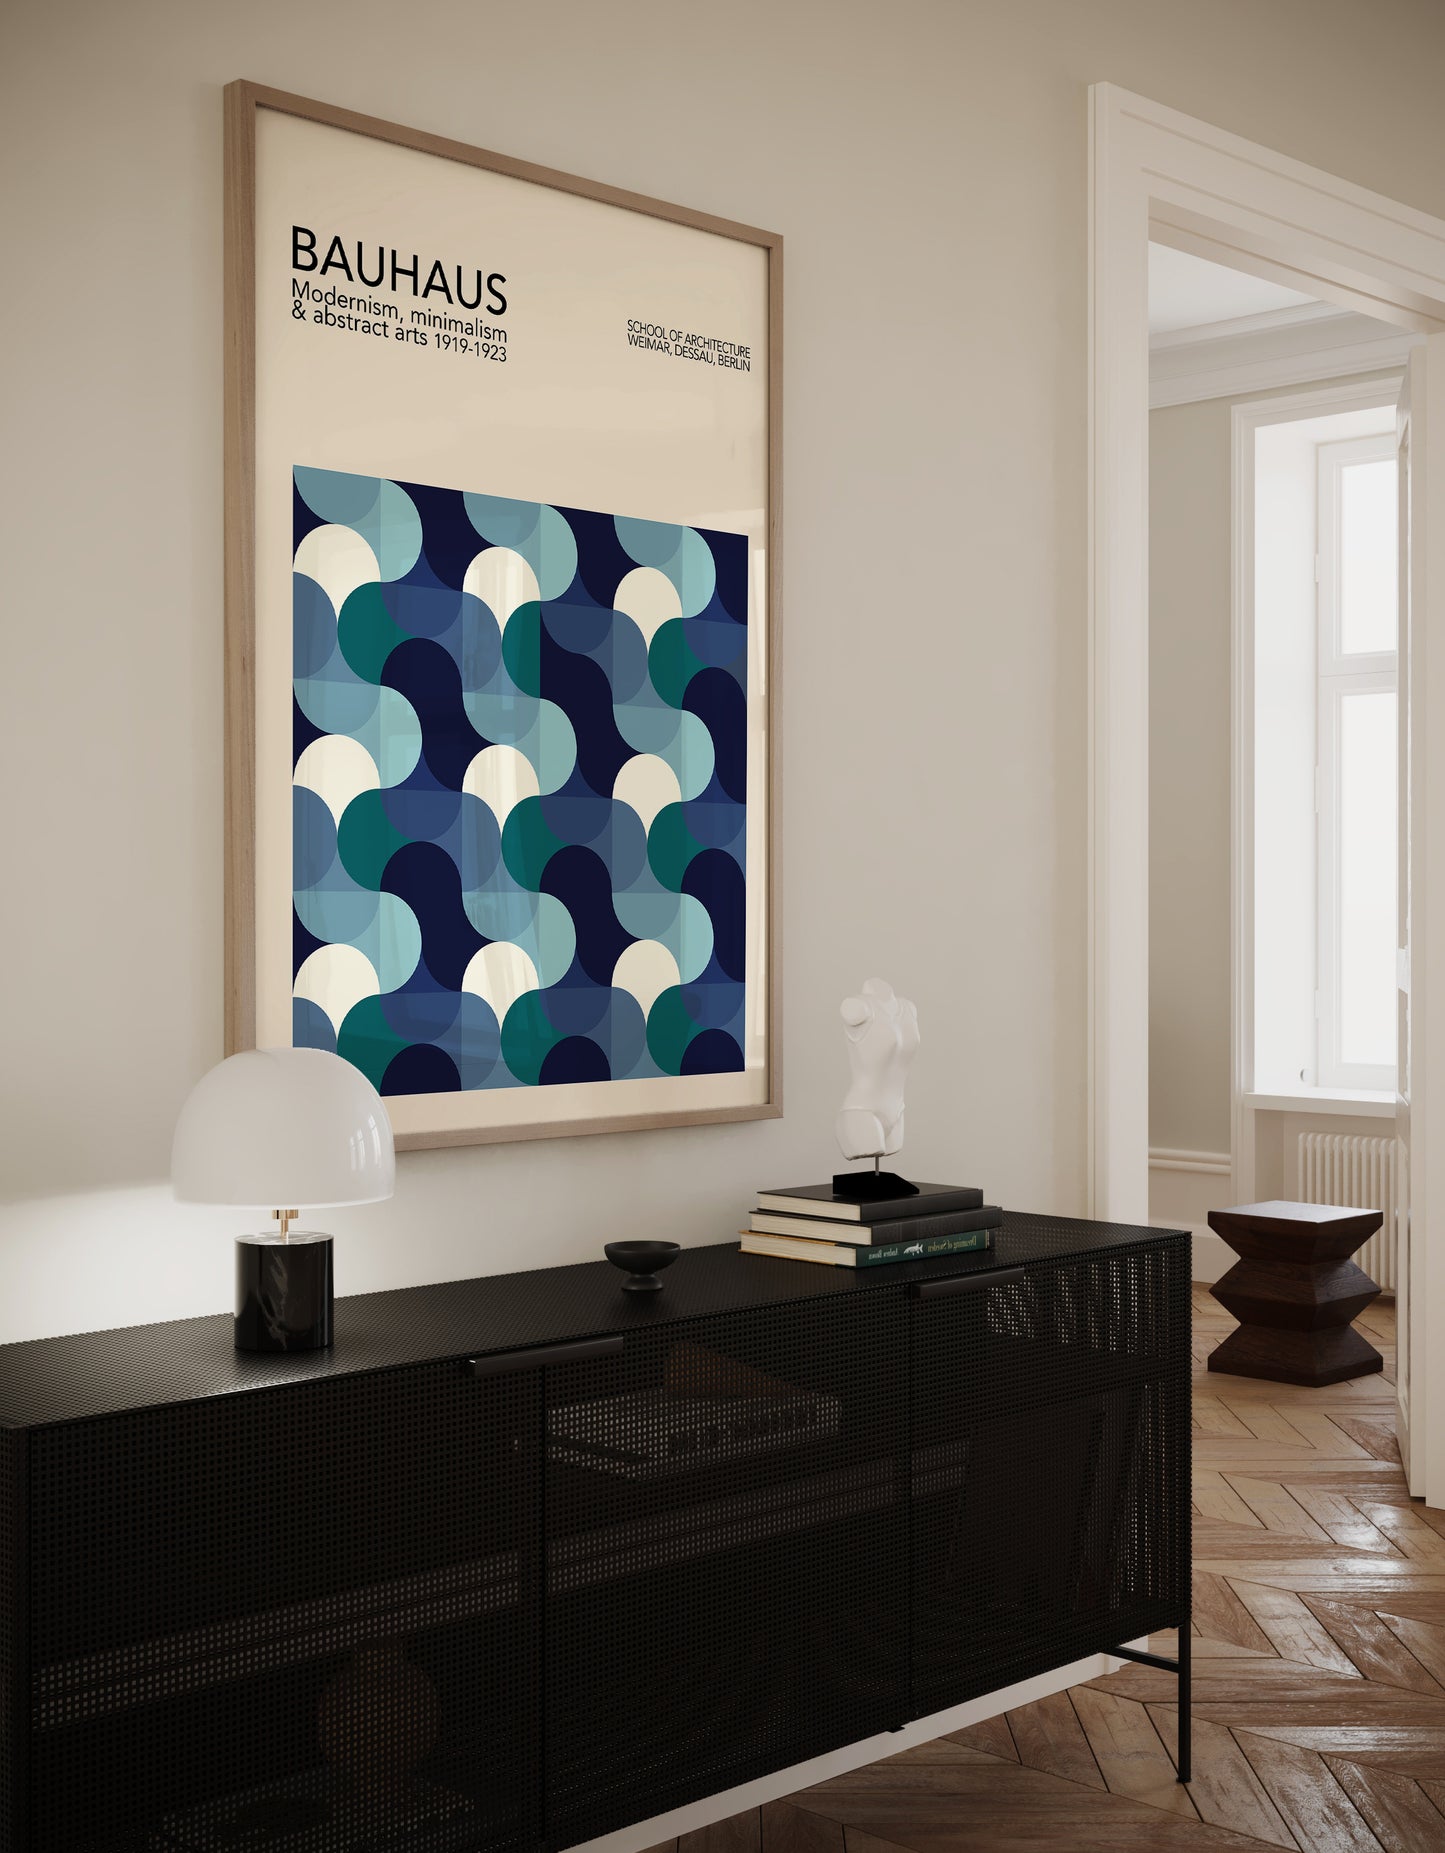 Blue Geometric Bauhaus Poster